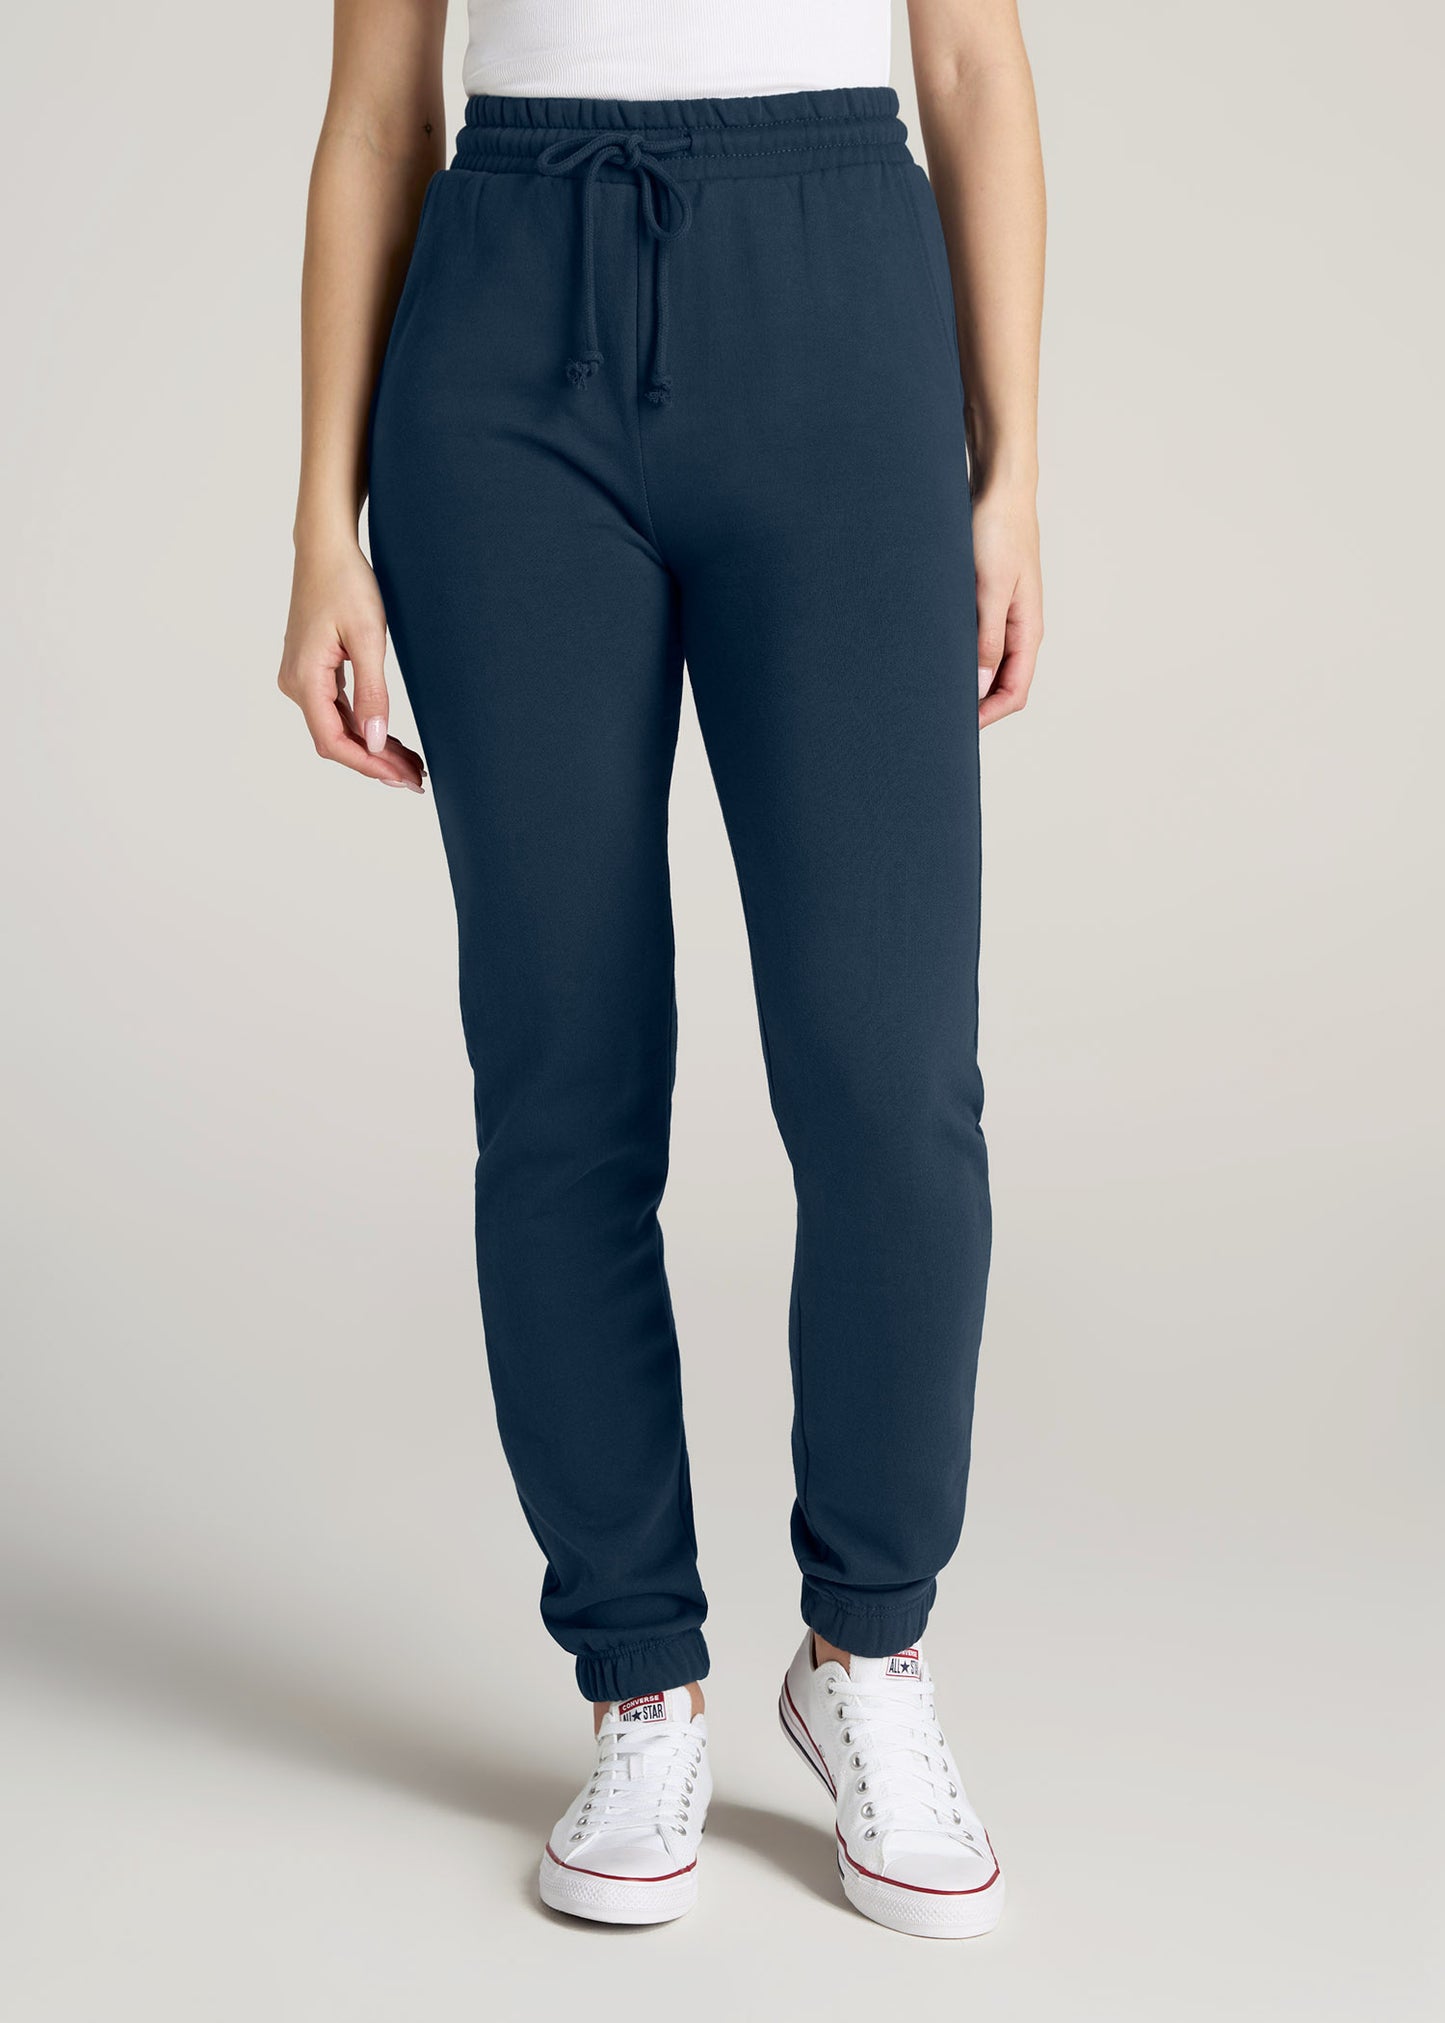 Wearever High-Waisted Tall Women's Sweatpants Grey Mix